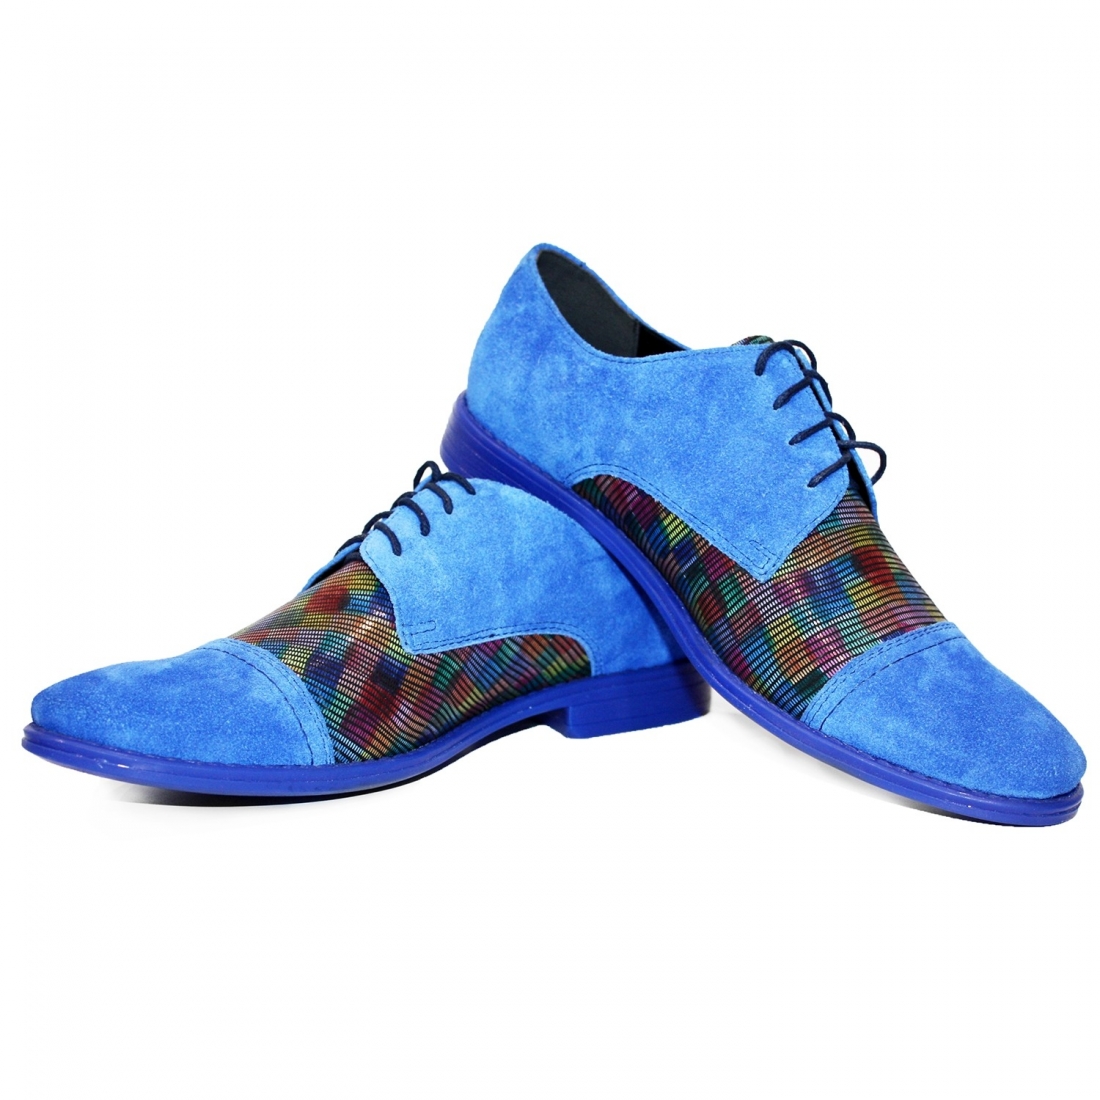 Modello Vikteem - Classic Shoes - Handmade Colorful Italian Leather Shoes